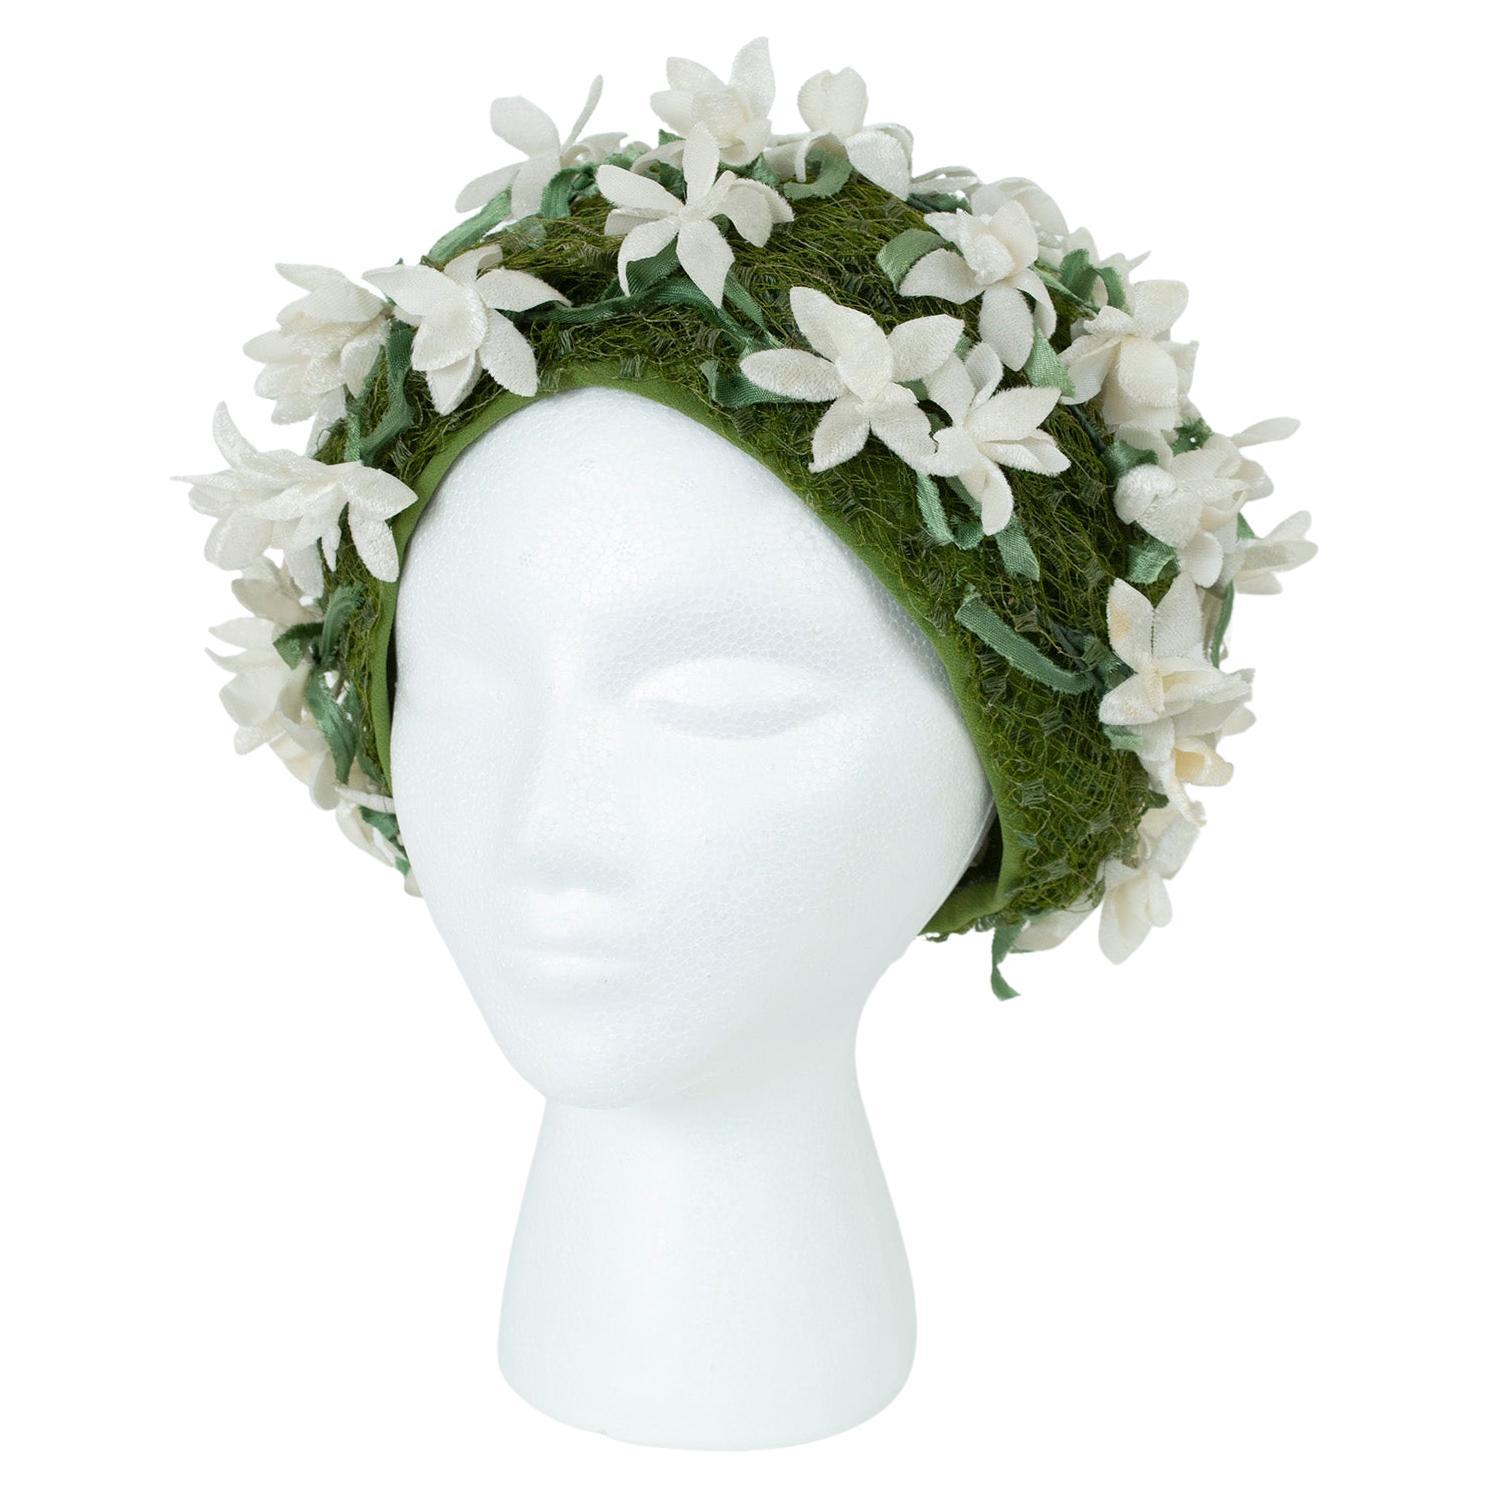 Christian Dior Grass Green Beehive Turban Hat with Velvet Gardenias – S-M, 1950s